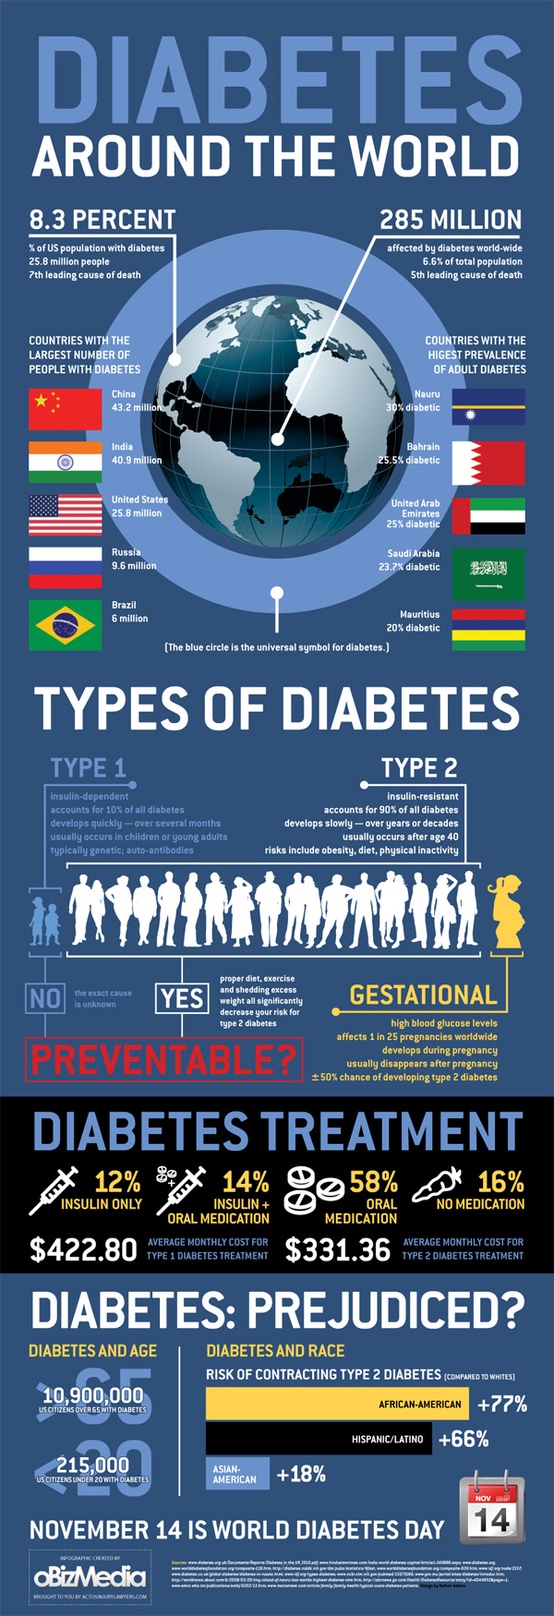 risk prevalence for type 2 diabetes pilot study pdf hmong